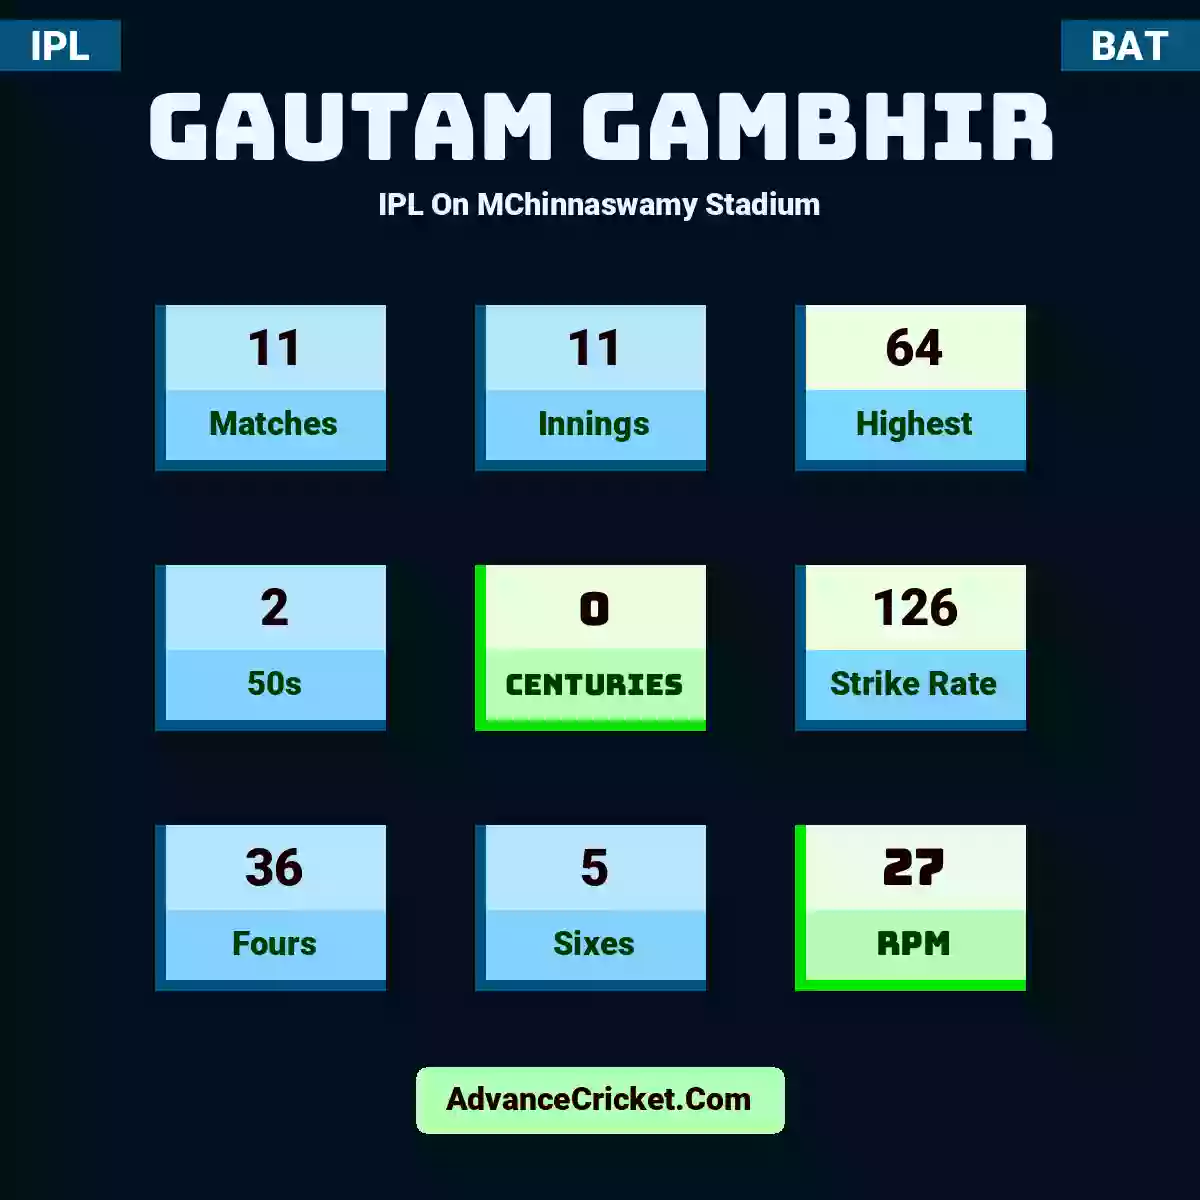 Gautam Gambhir IPL  On MChinnaswamy Stadium, Gautam Gambhir played 11 matches, scored 64 runs as highest, 2 half-centuries, and 0 centuries, with a strike rate of 126. G.Gambhir hit 36 fours and 5 sixes, with an RPM of 27.